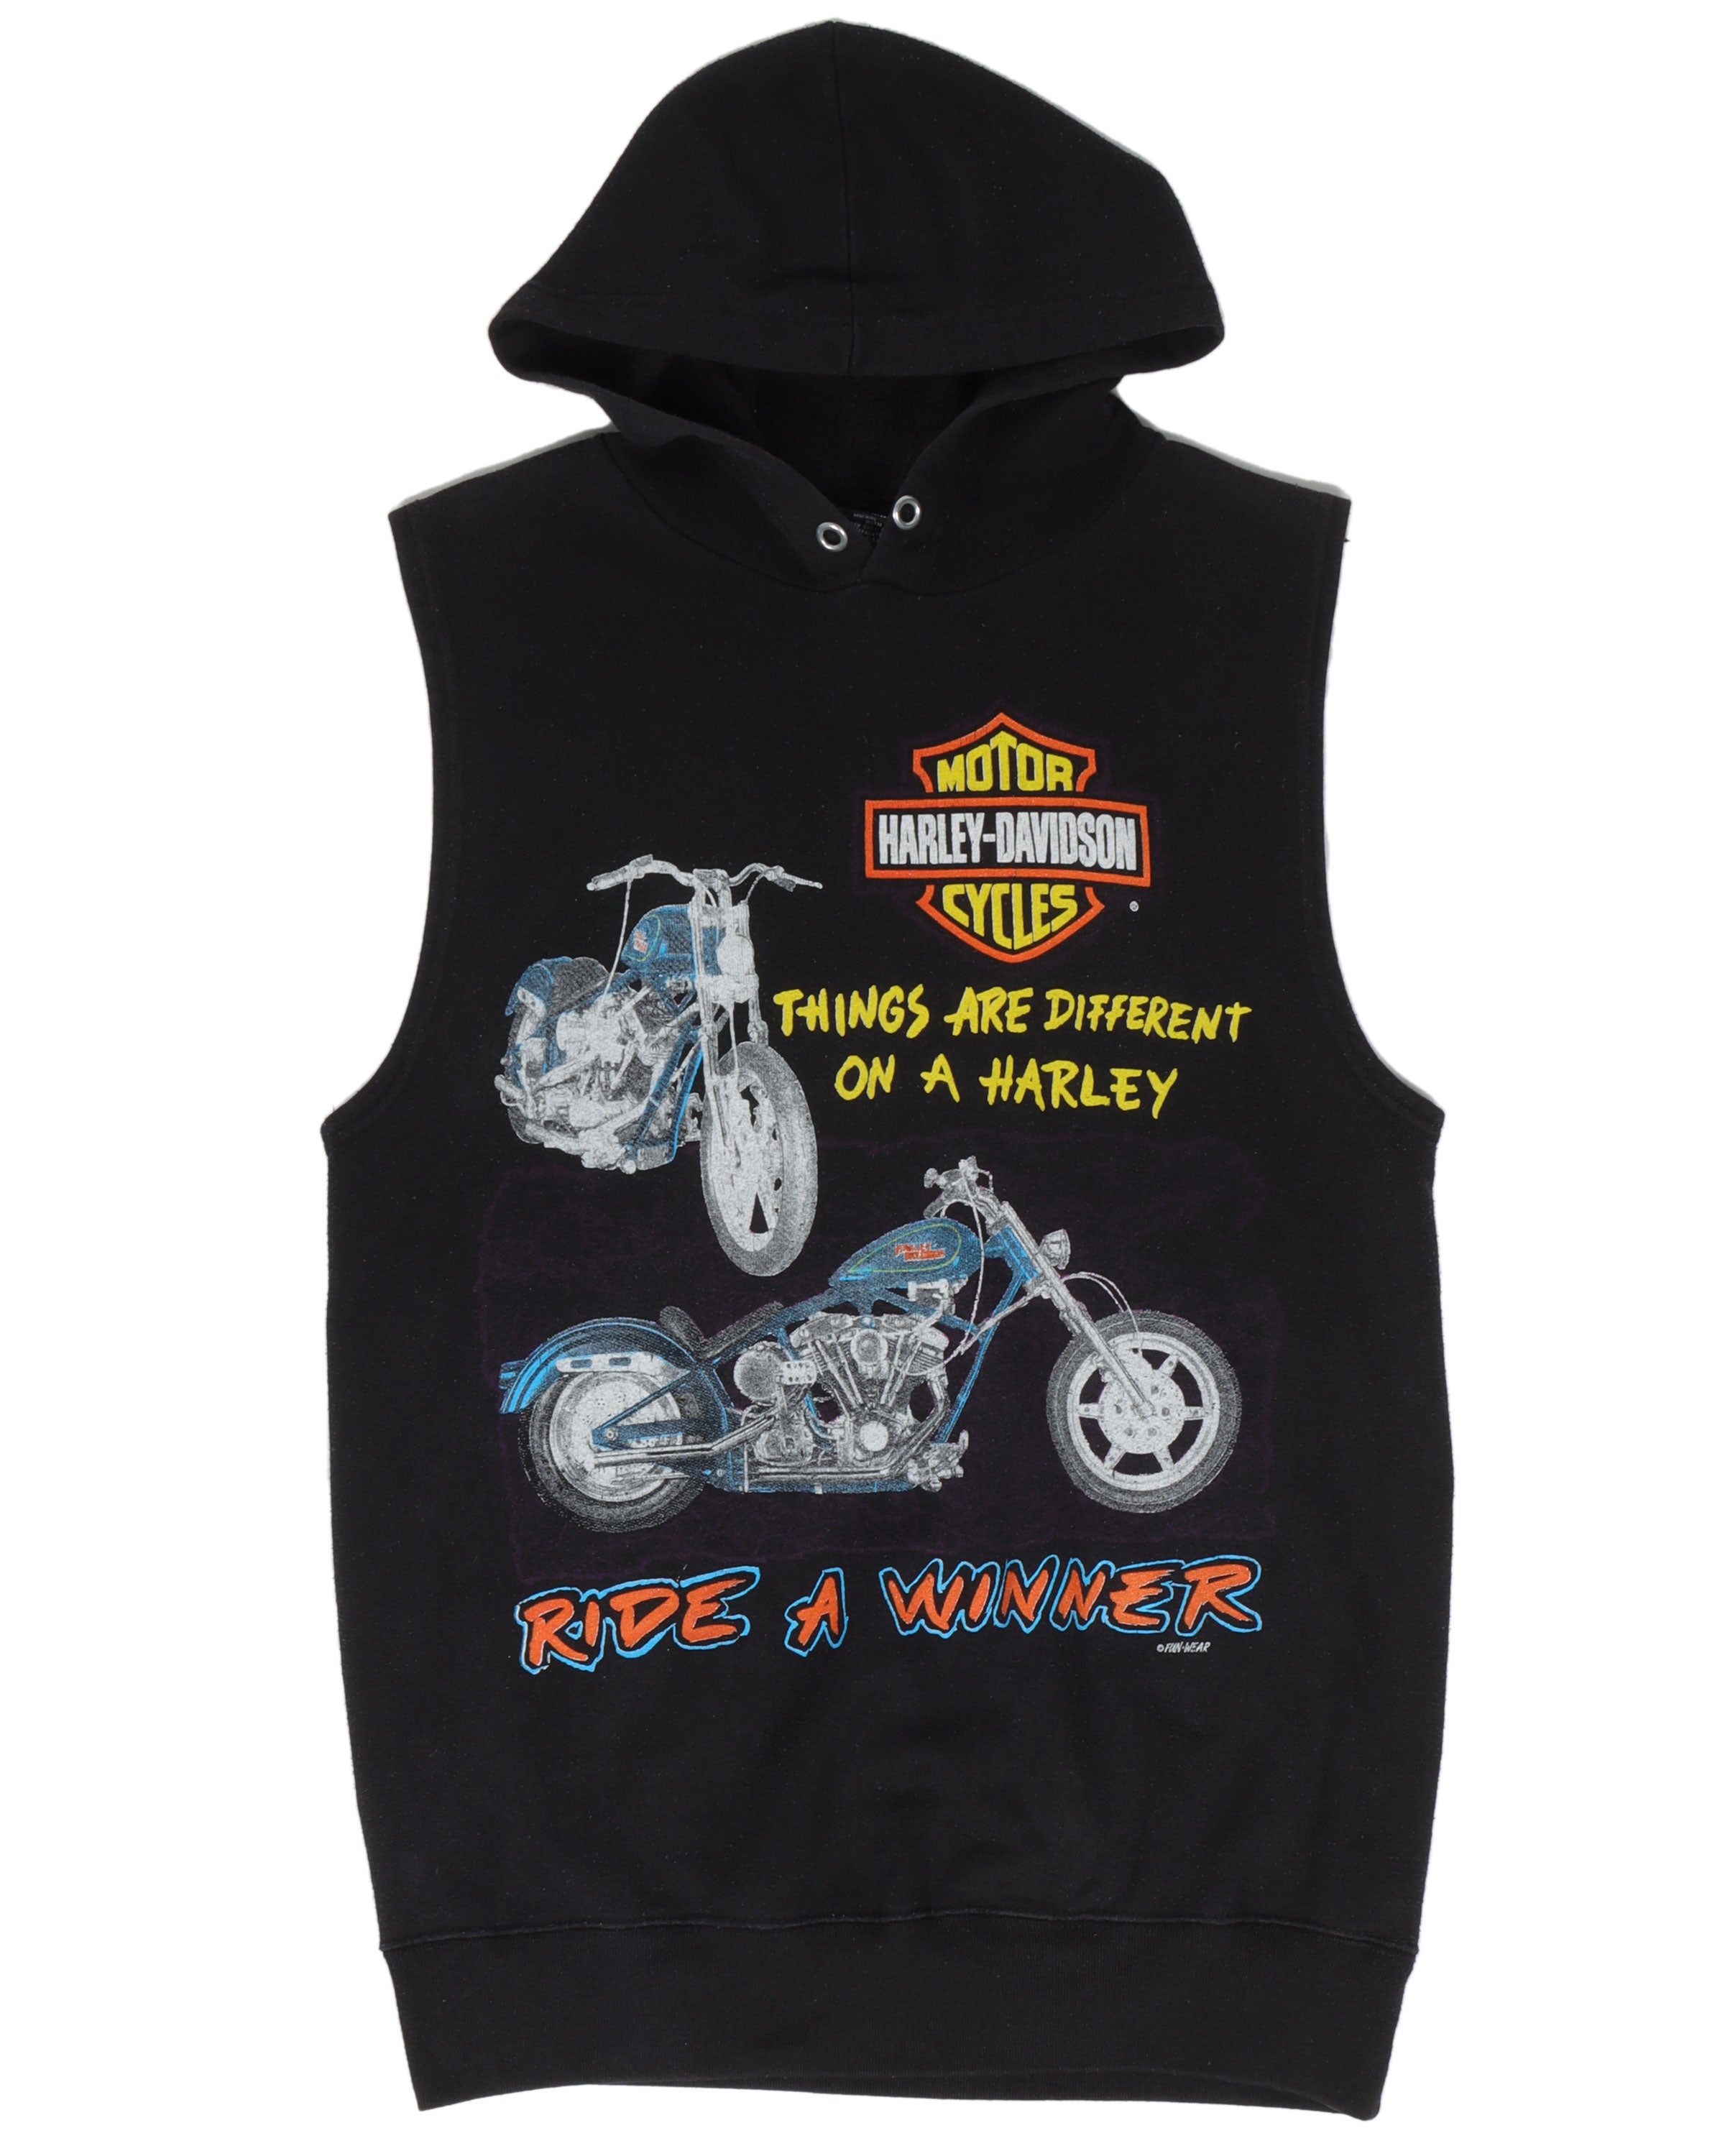 Harley Davidson "Ride A Winner" Sleeveless Hoodie